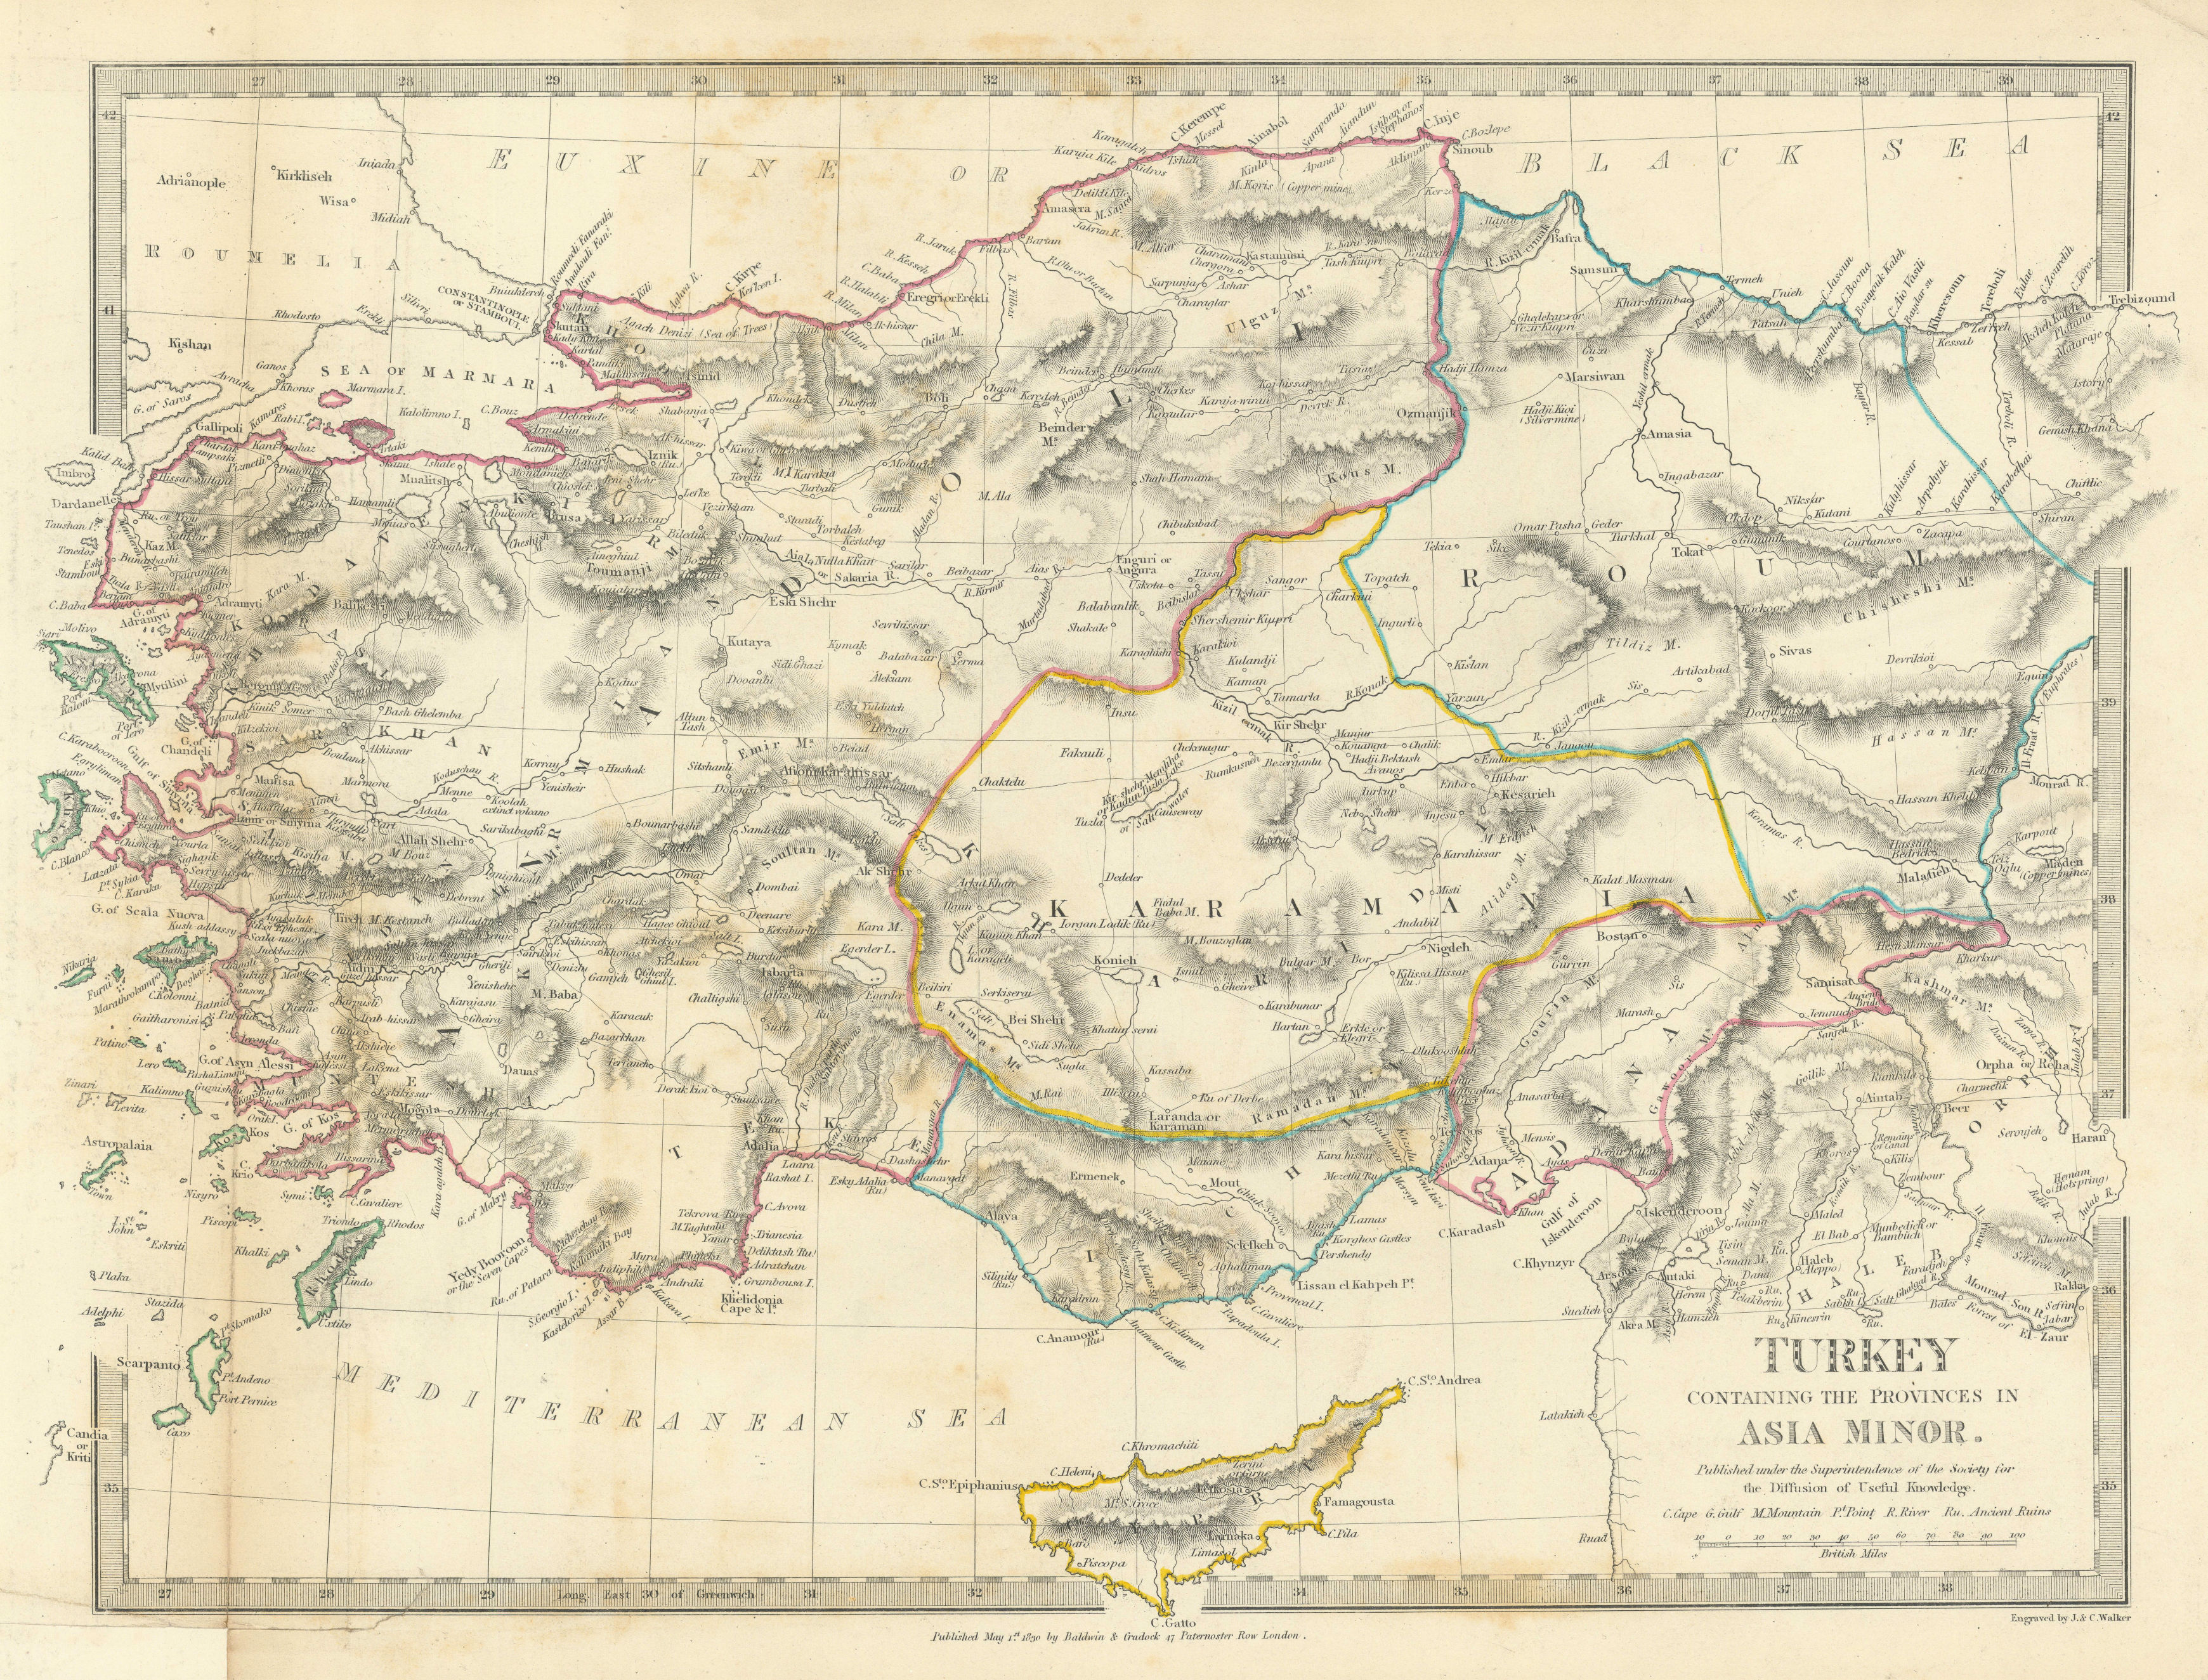 Associate Product TURKEY. Asia Minor provinces. Karamania Adana Itchi Roum. SDUK 1844 old map